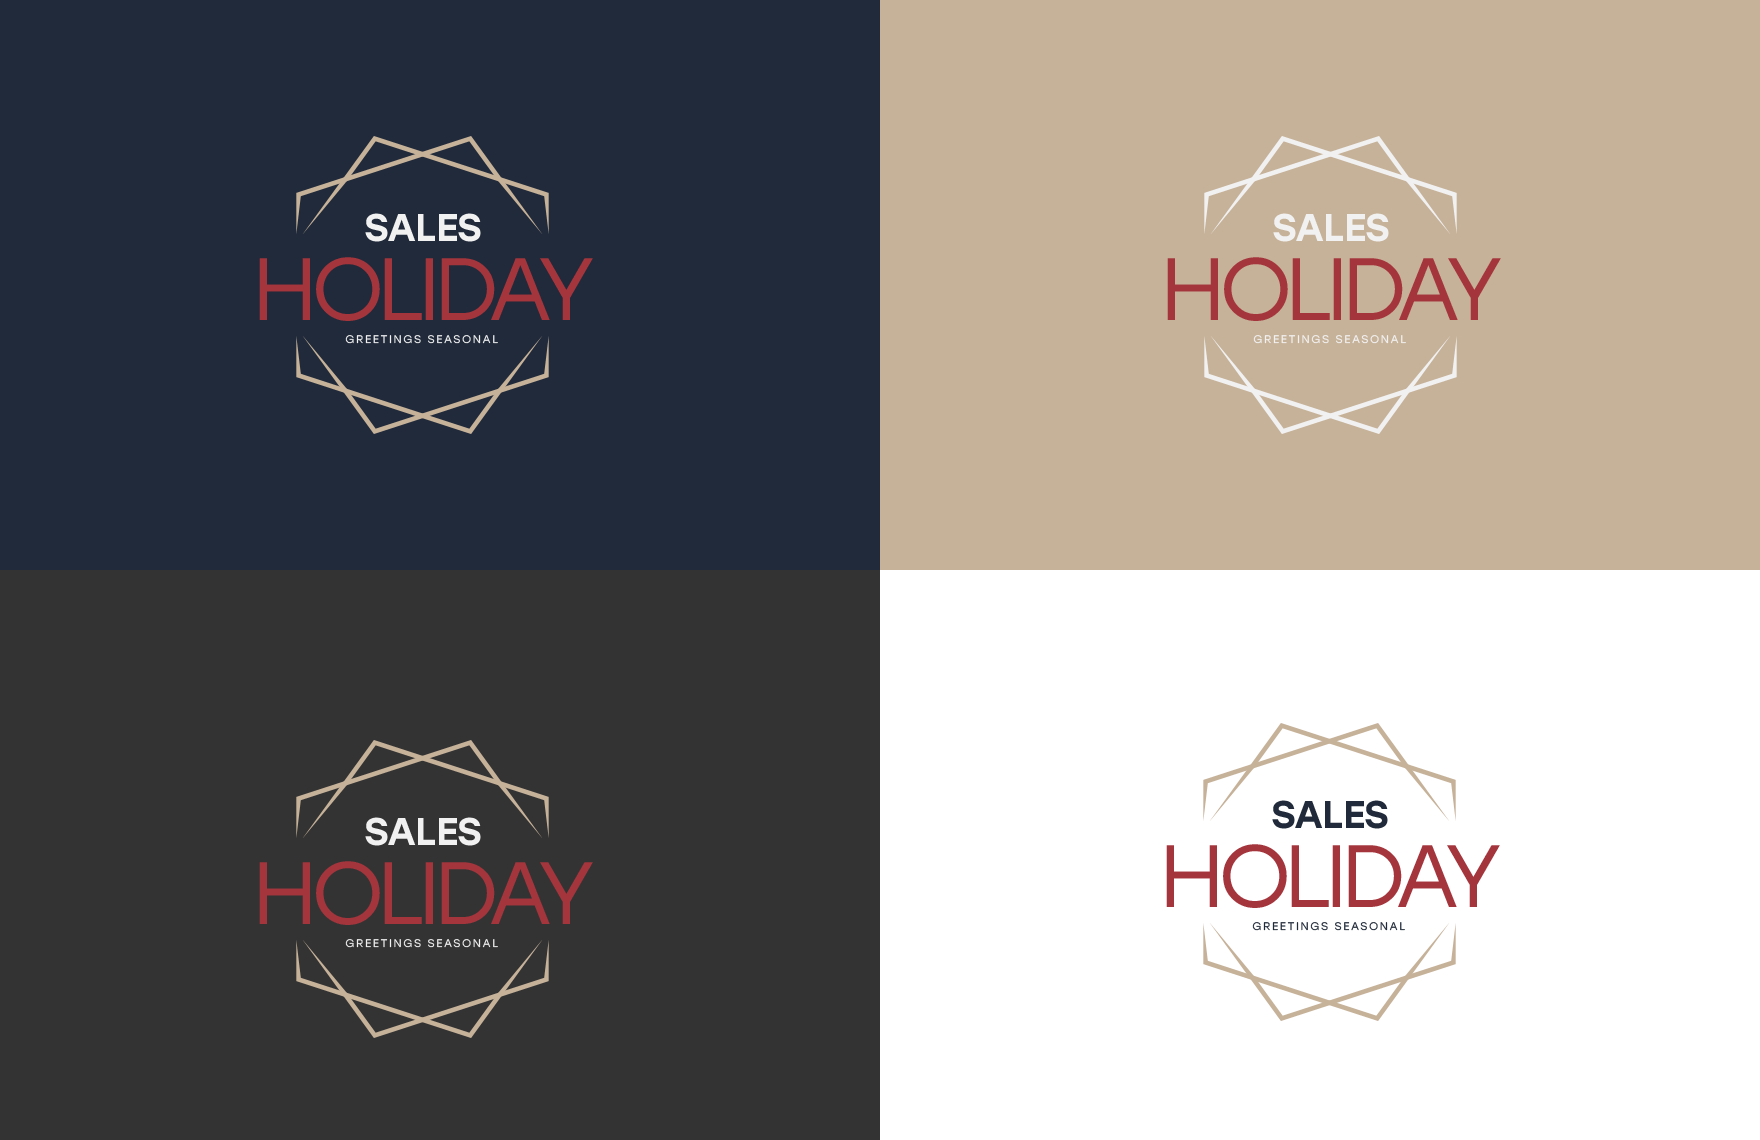 Sales Holiday Greetings Seasonal Logo Template